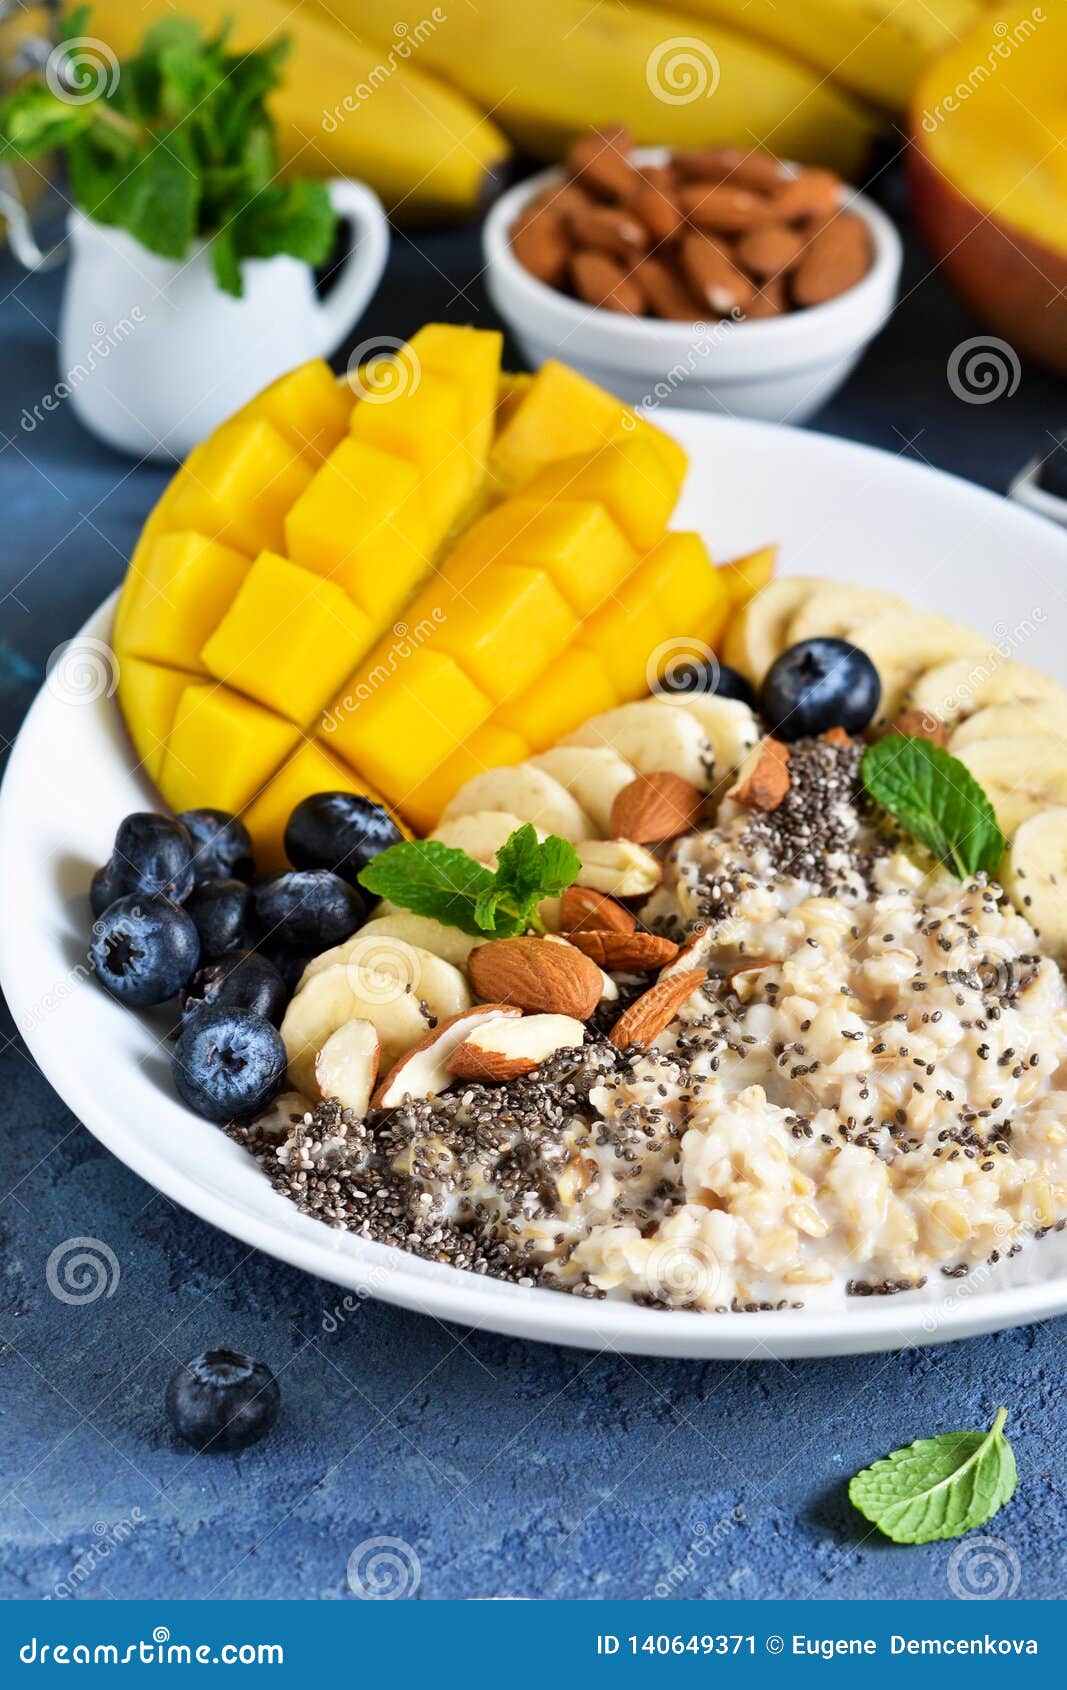 Good Morning! Breakfast with Oatmeal, Banana, Mango, Blueberries ...